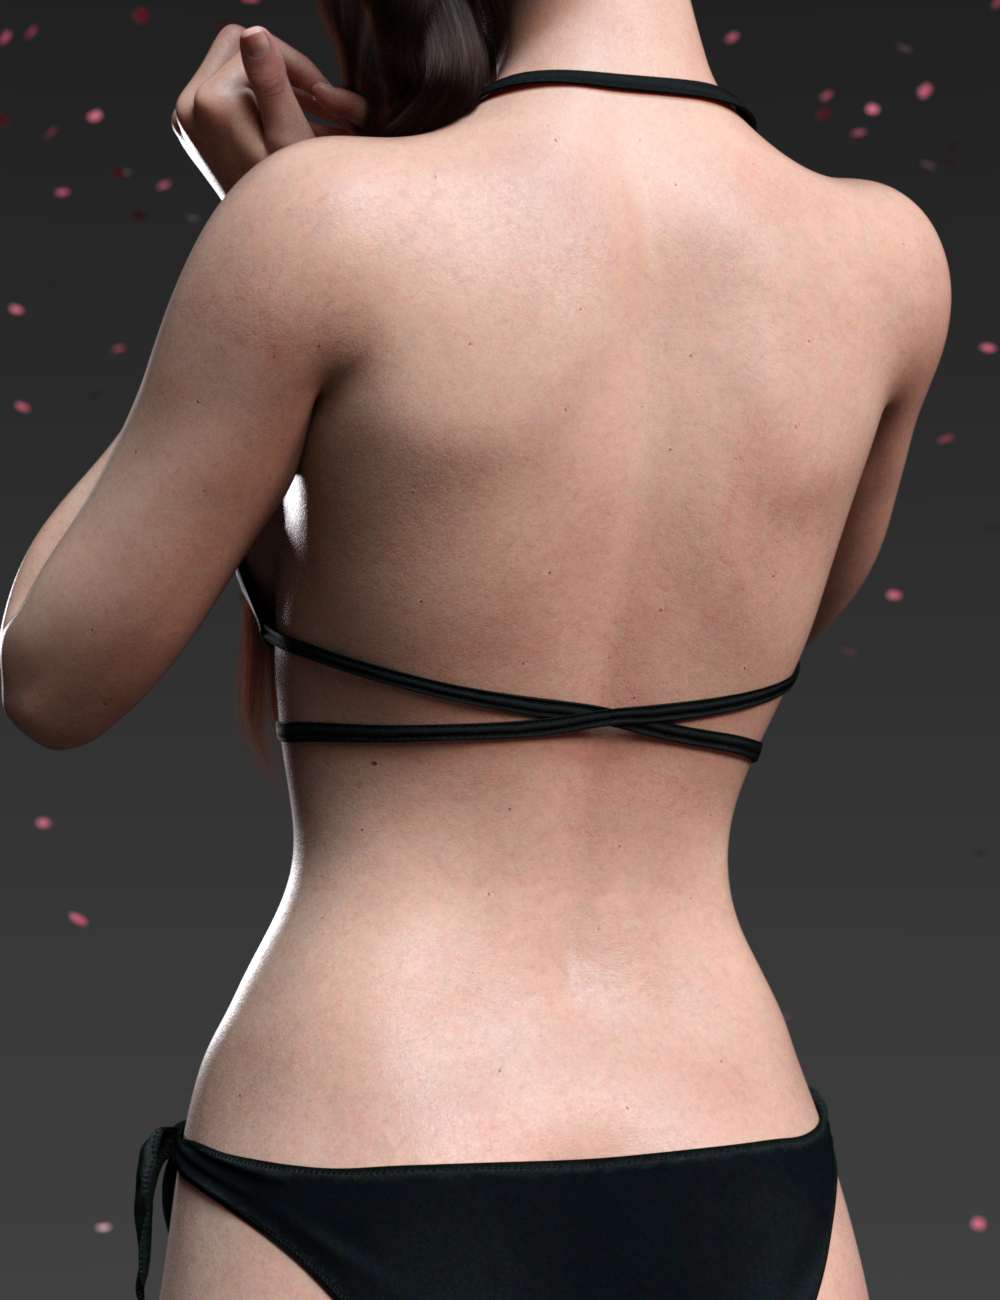 Tarni for Genesis 8.1 Female by: Saiyaness, 3D Models by Daz 3D